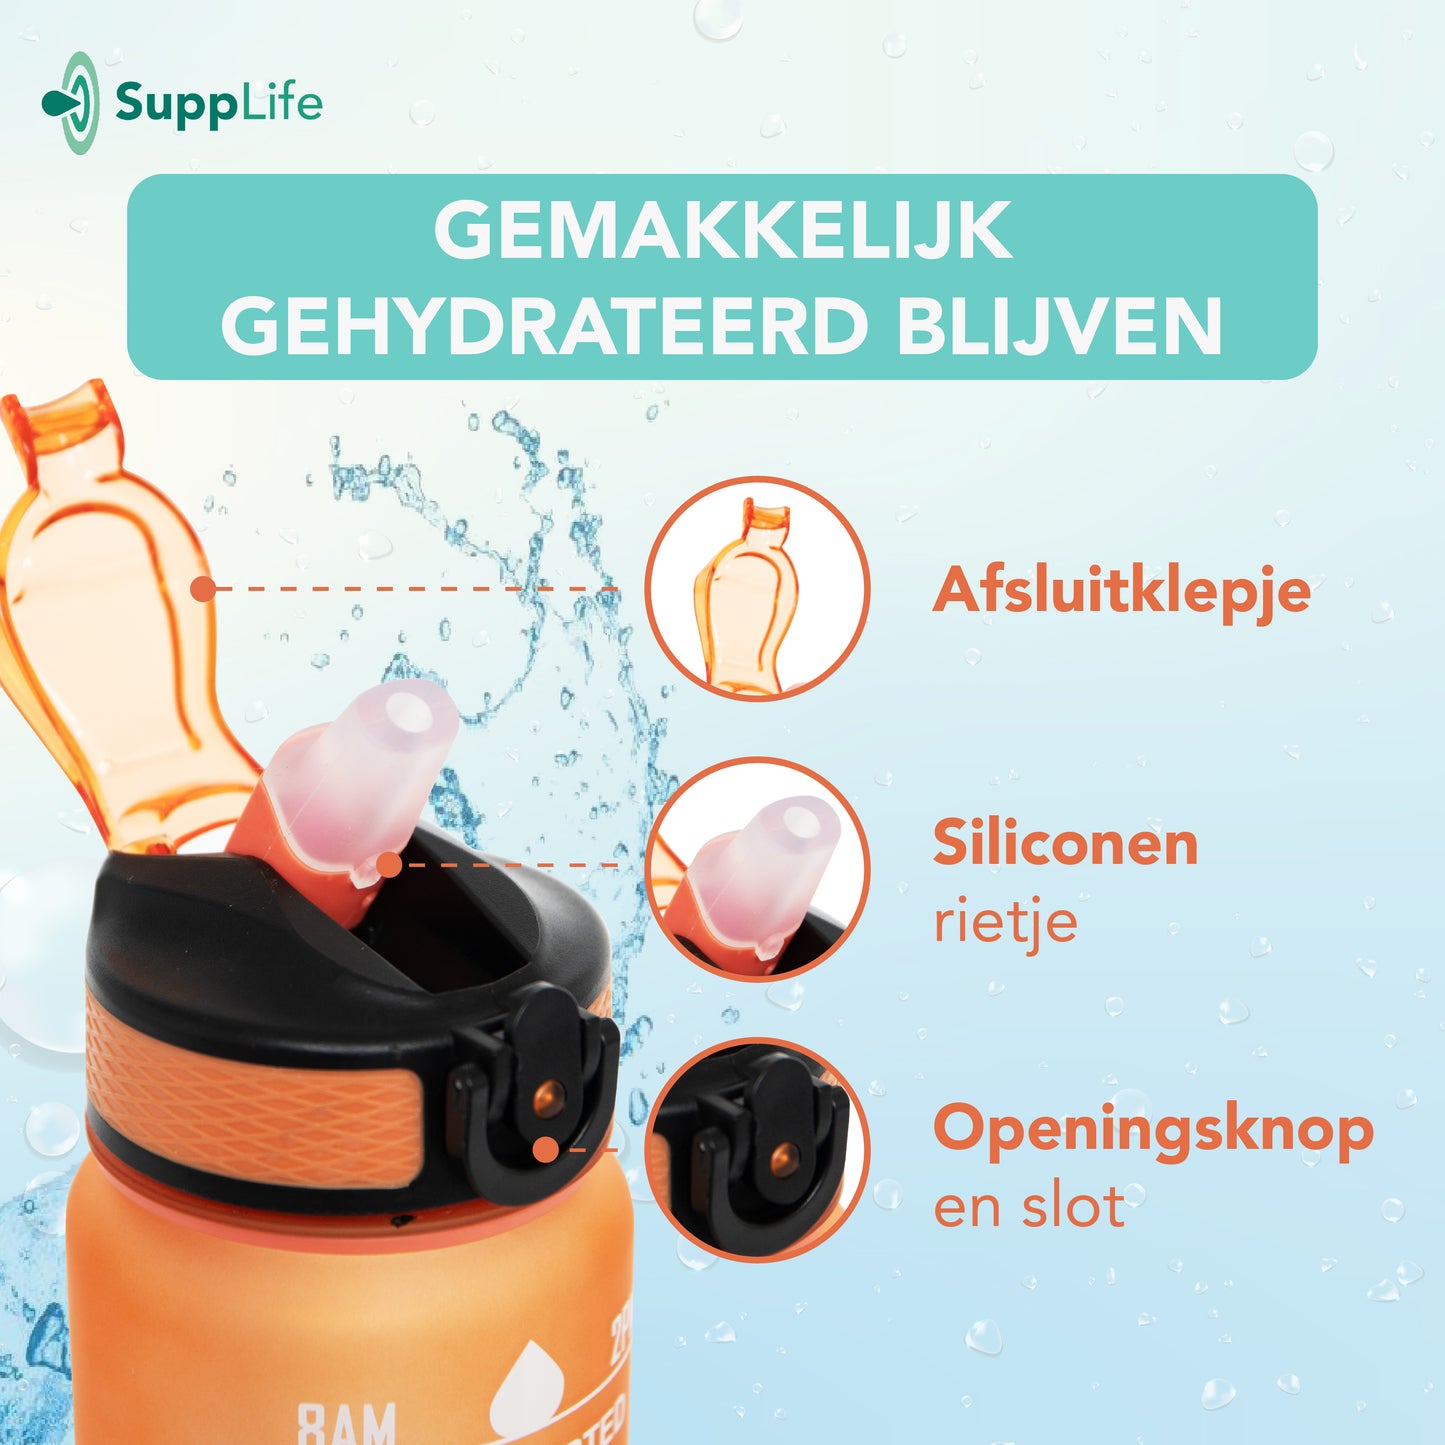 Supplife Motivatie Waterfles Oranje Cyaan - 1 Liter